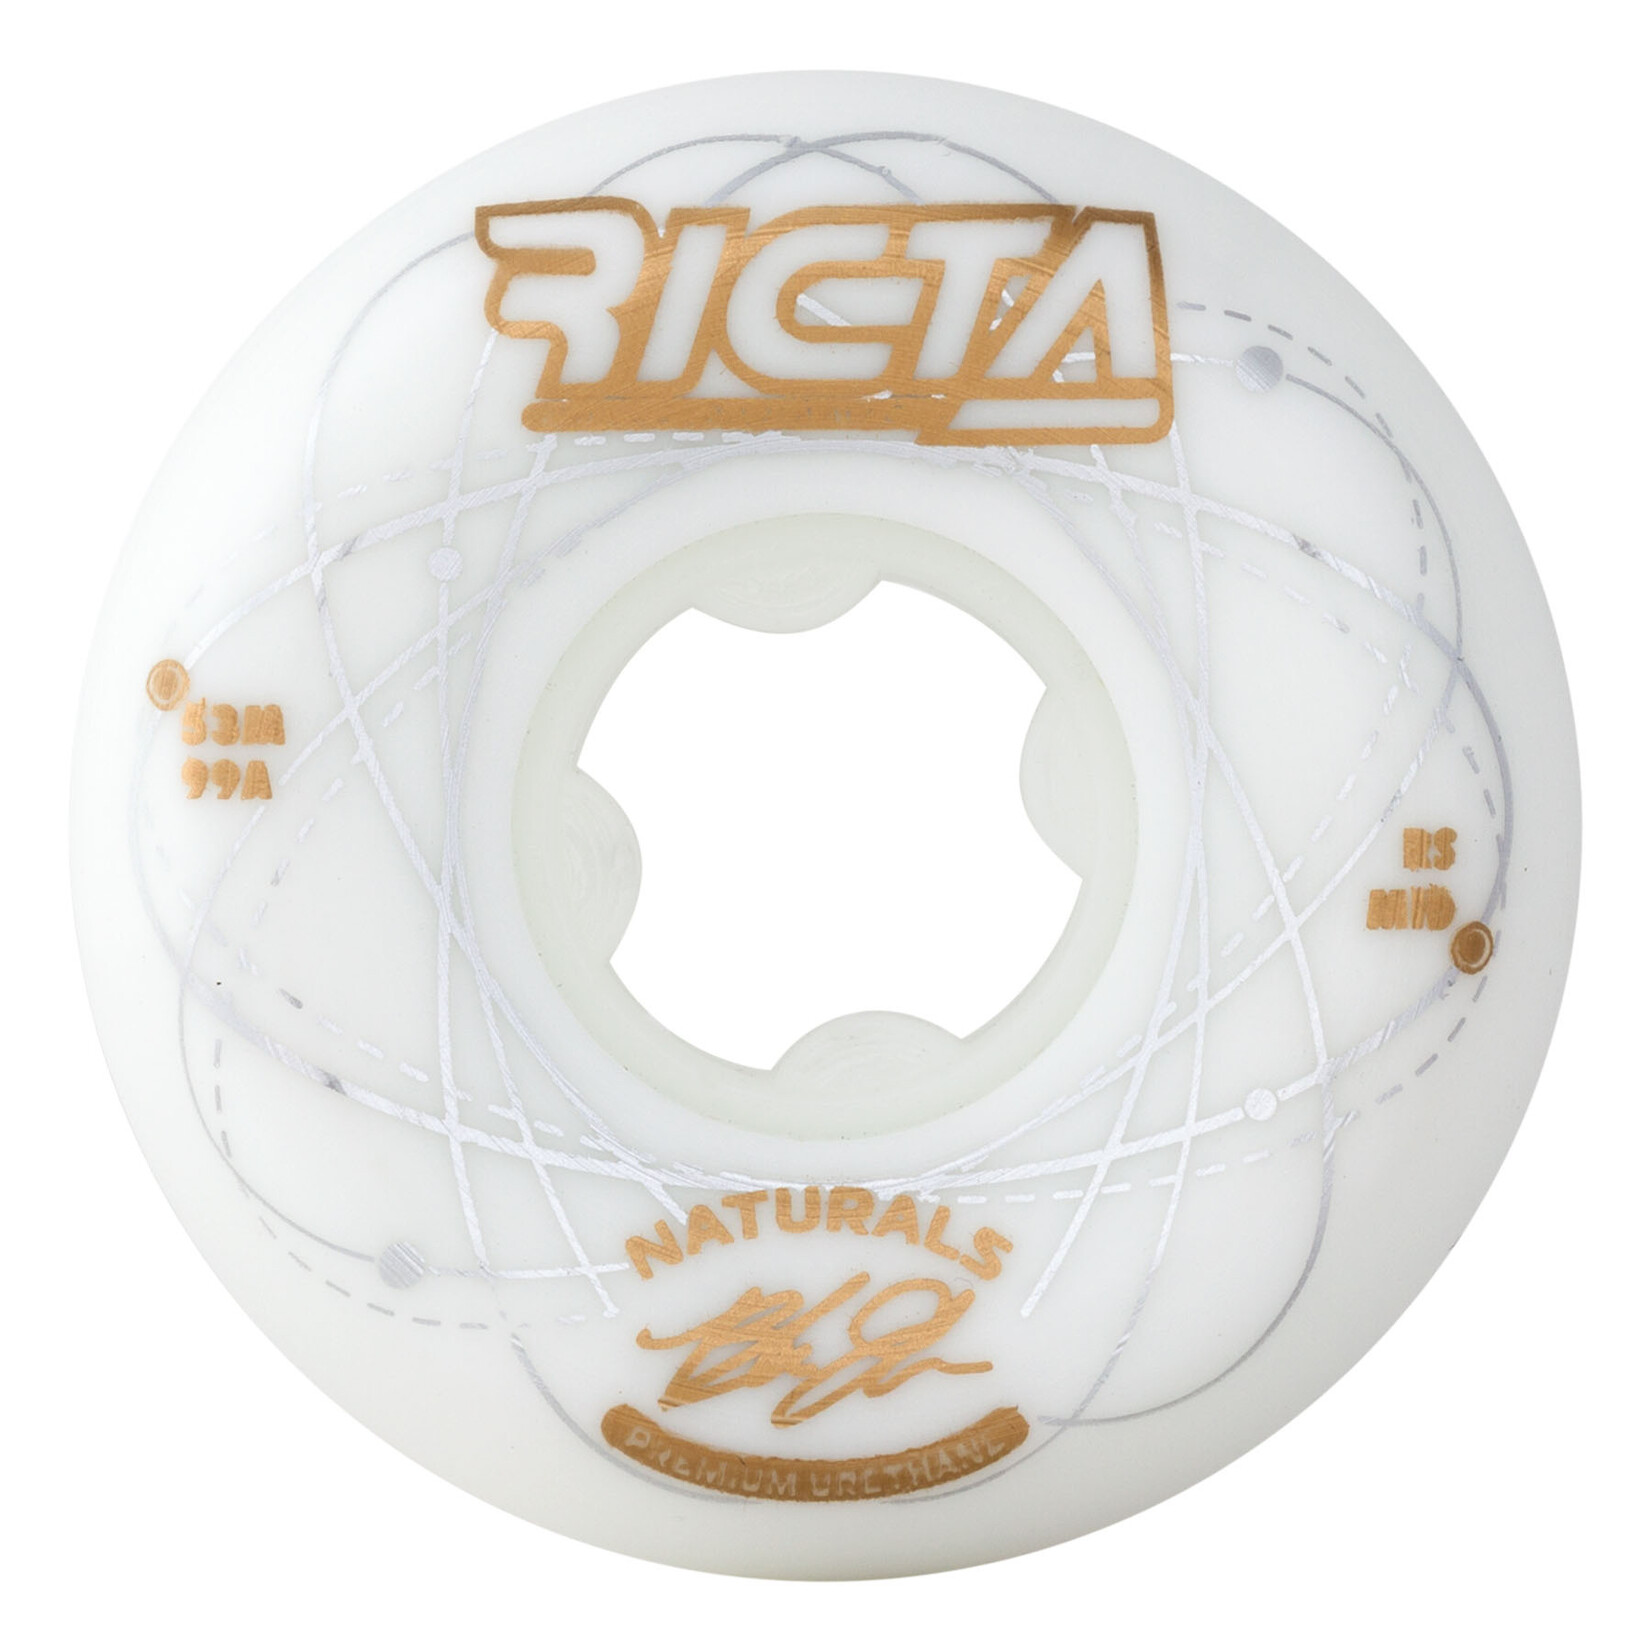 Ricta Ricta Johnson Orbital Naturals Mid 99a Skateboard Wheels - 53mm